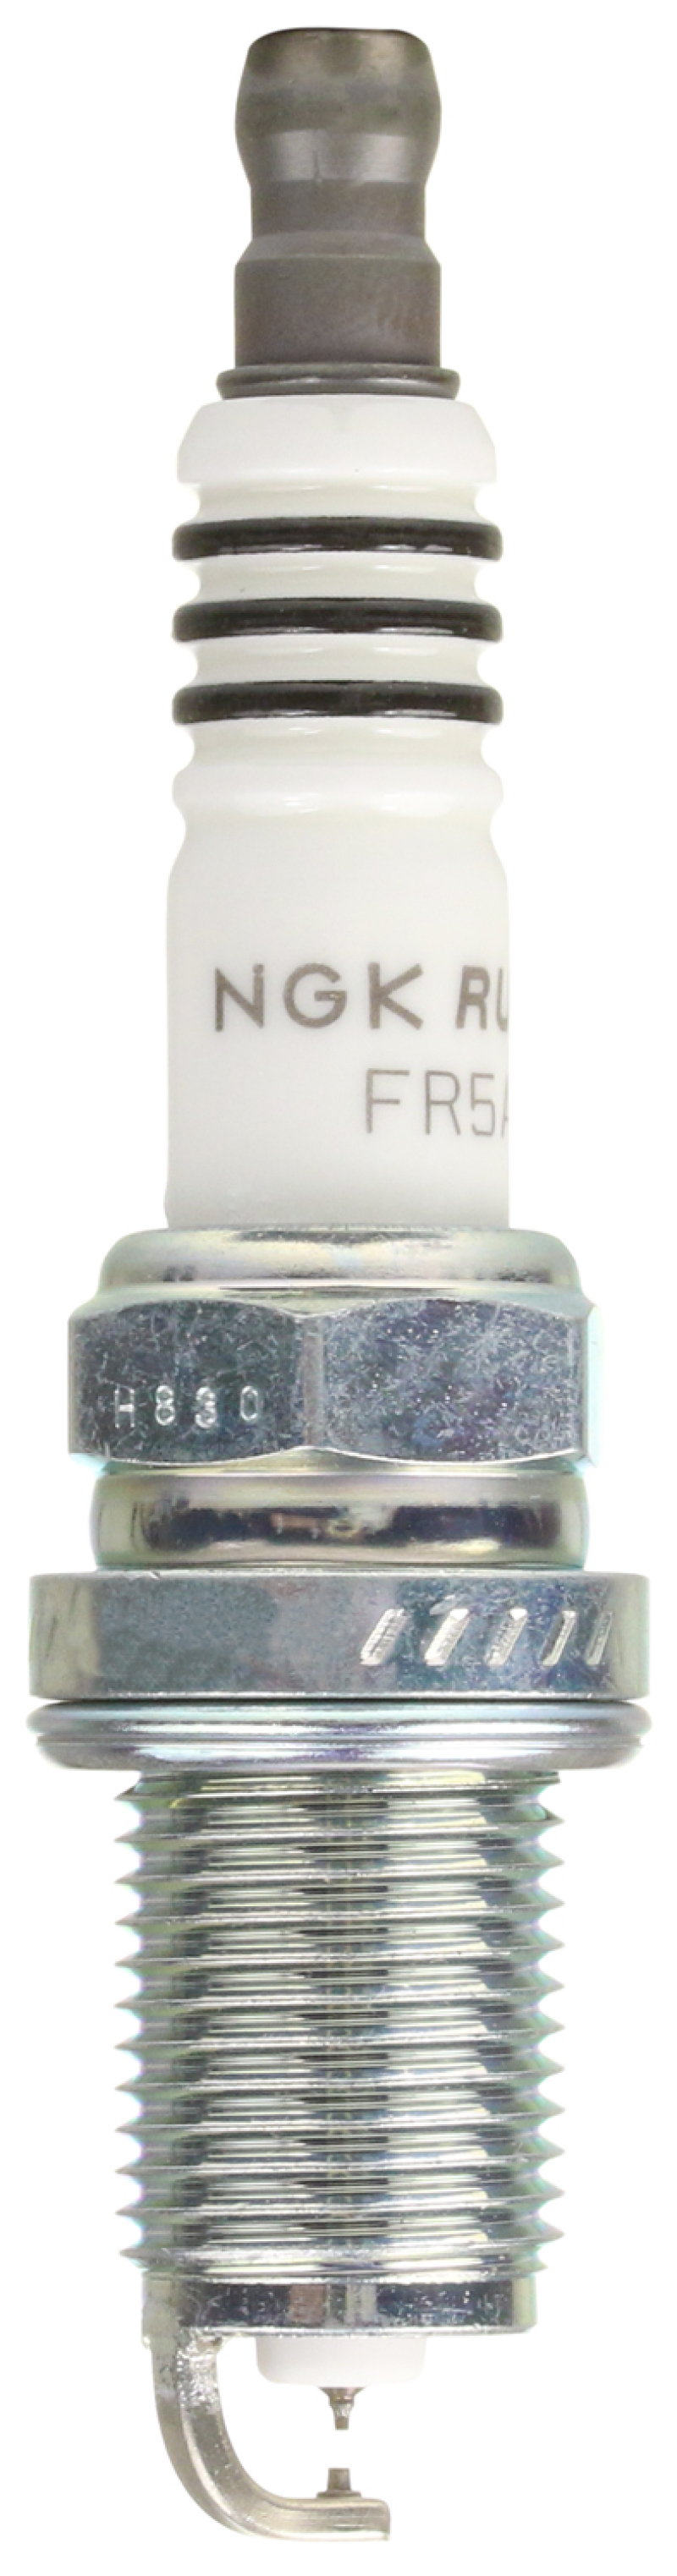 NGK Ruthenium HX Spark Plug Box of 4 (FR5AHX) - 95839